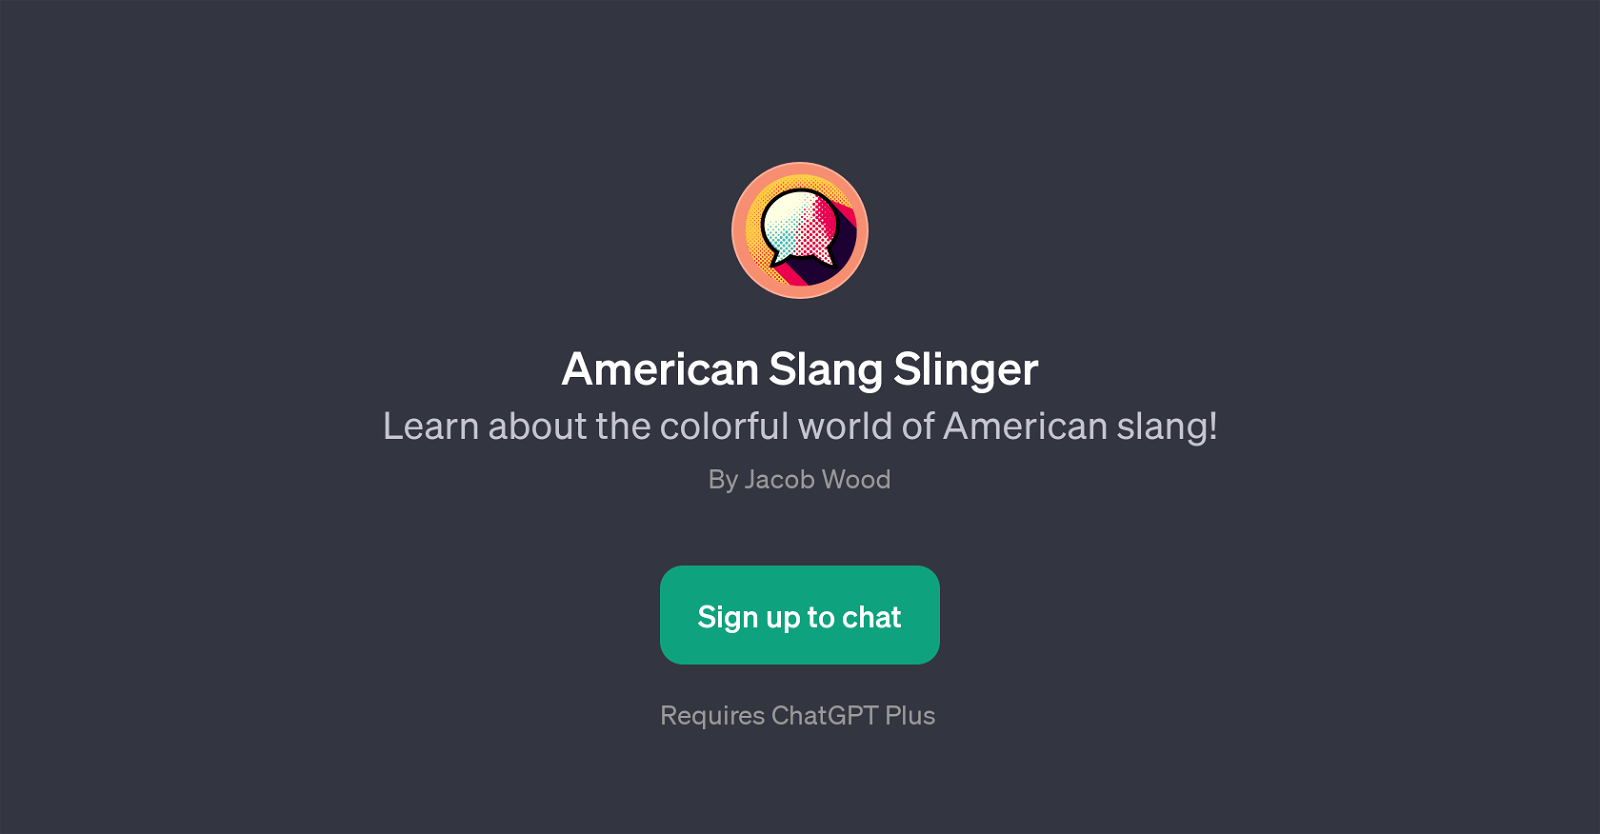 American Slang Slinger website